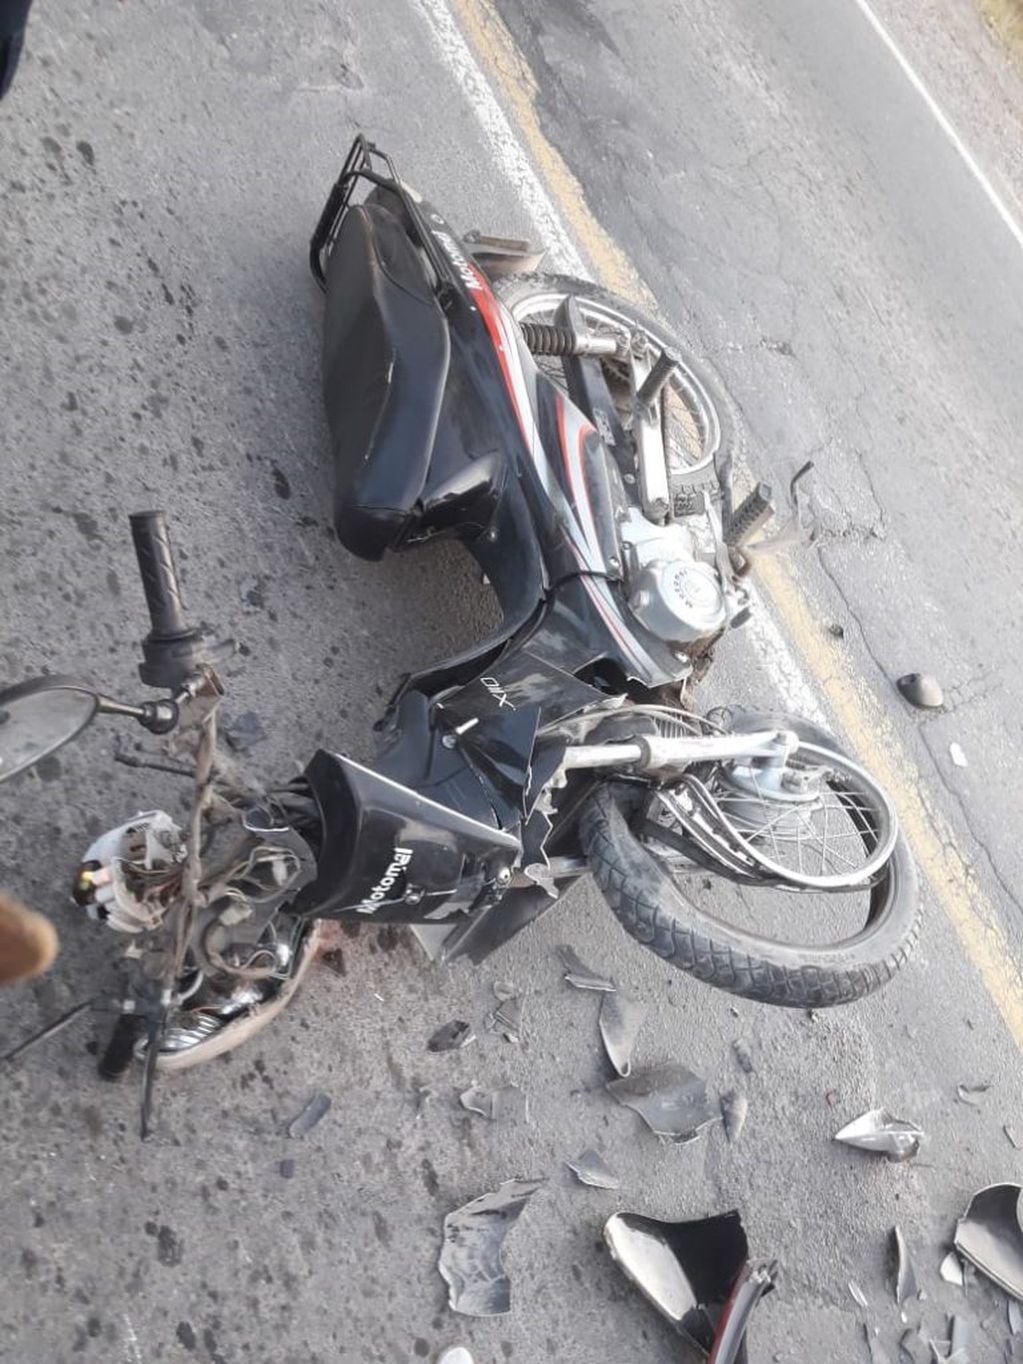 Motocicleta involucrada en el accidente de tránsito, Malagueño.